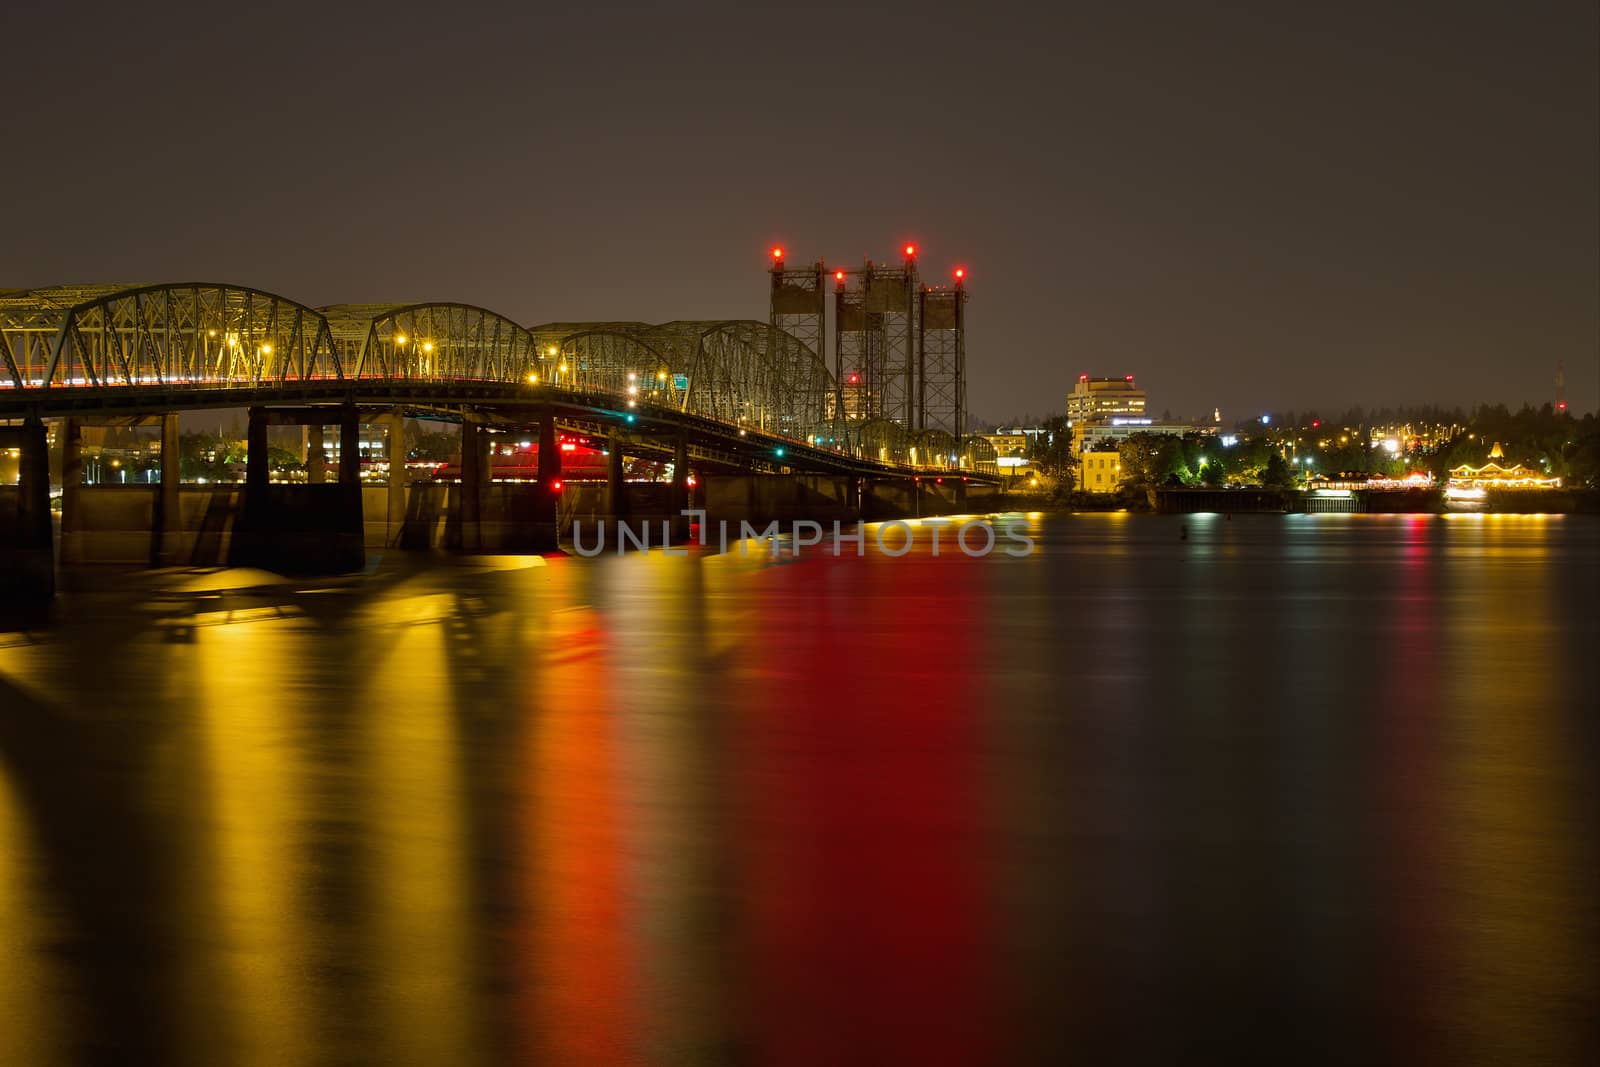 Light Trails on Columbia River Crossing I-5 Interstate Bridge at Night